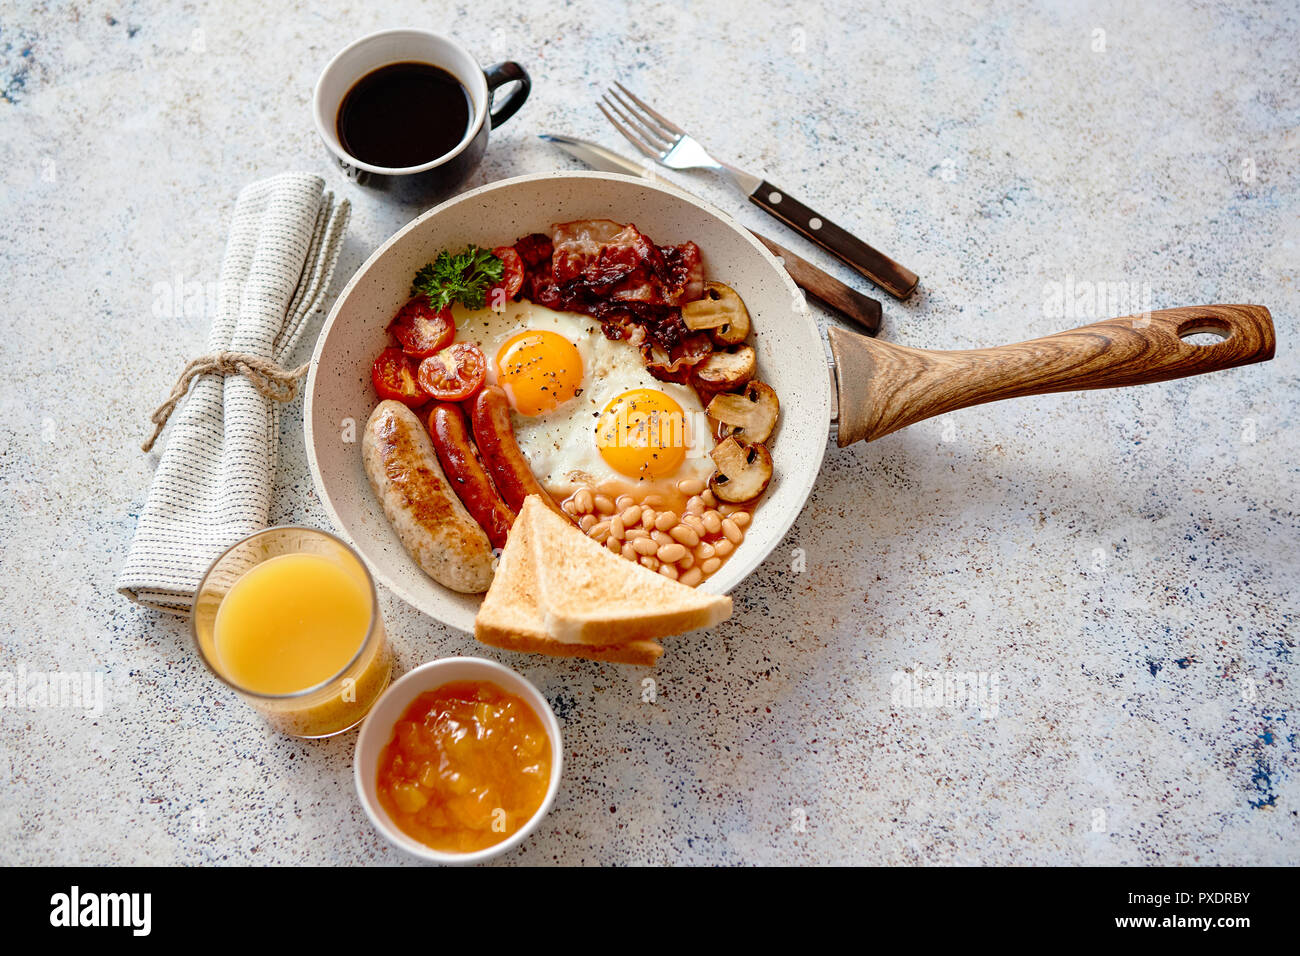 Traditional Full English Breakfast on frying pan. Stock Photo